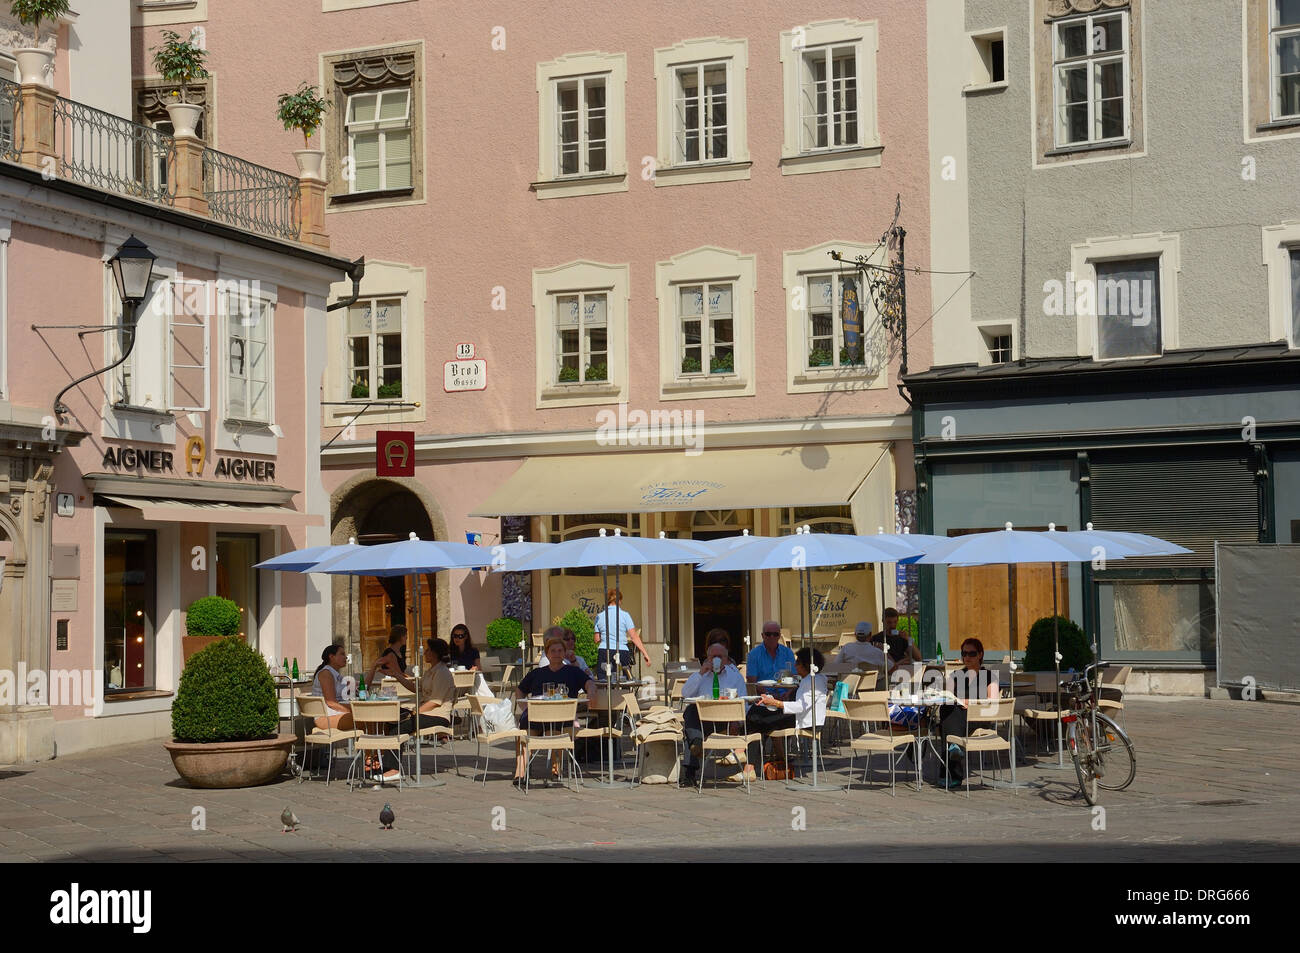 Pavement cafe Furst restaurant, Alter Markt Square, Salzburg Austria Stock Photo